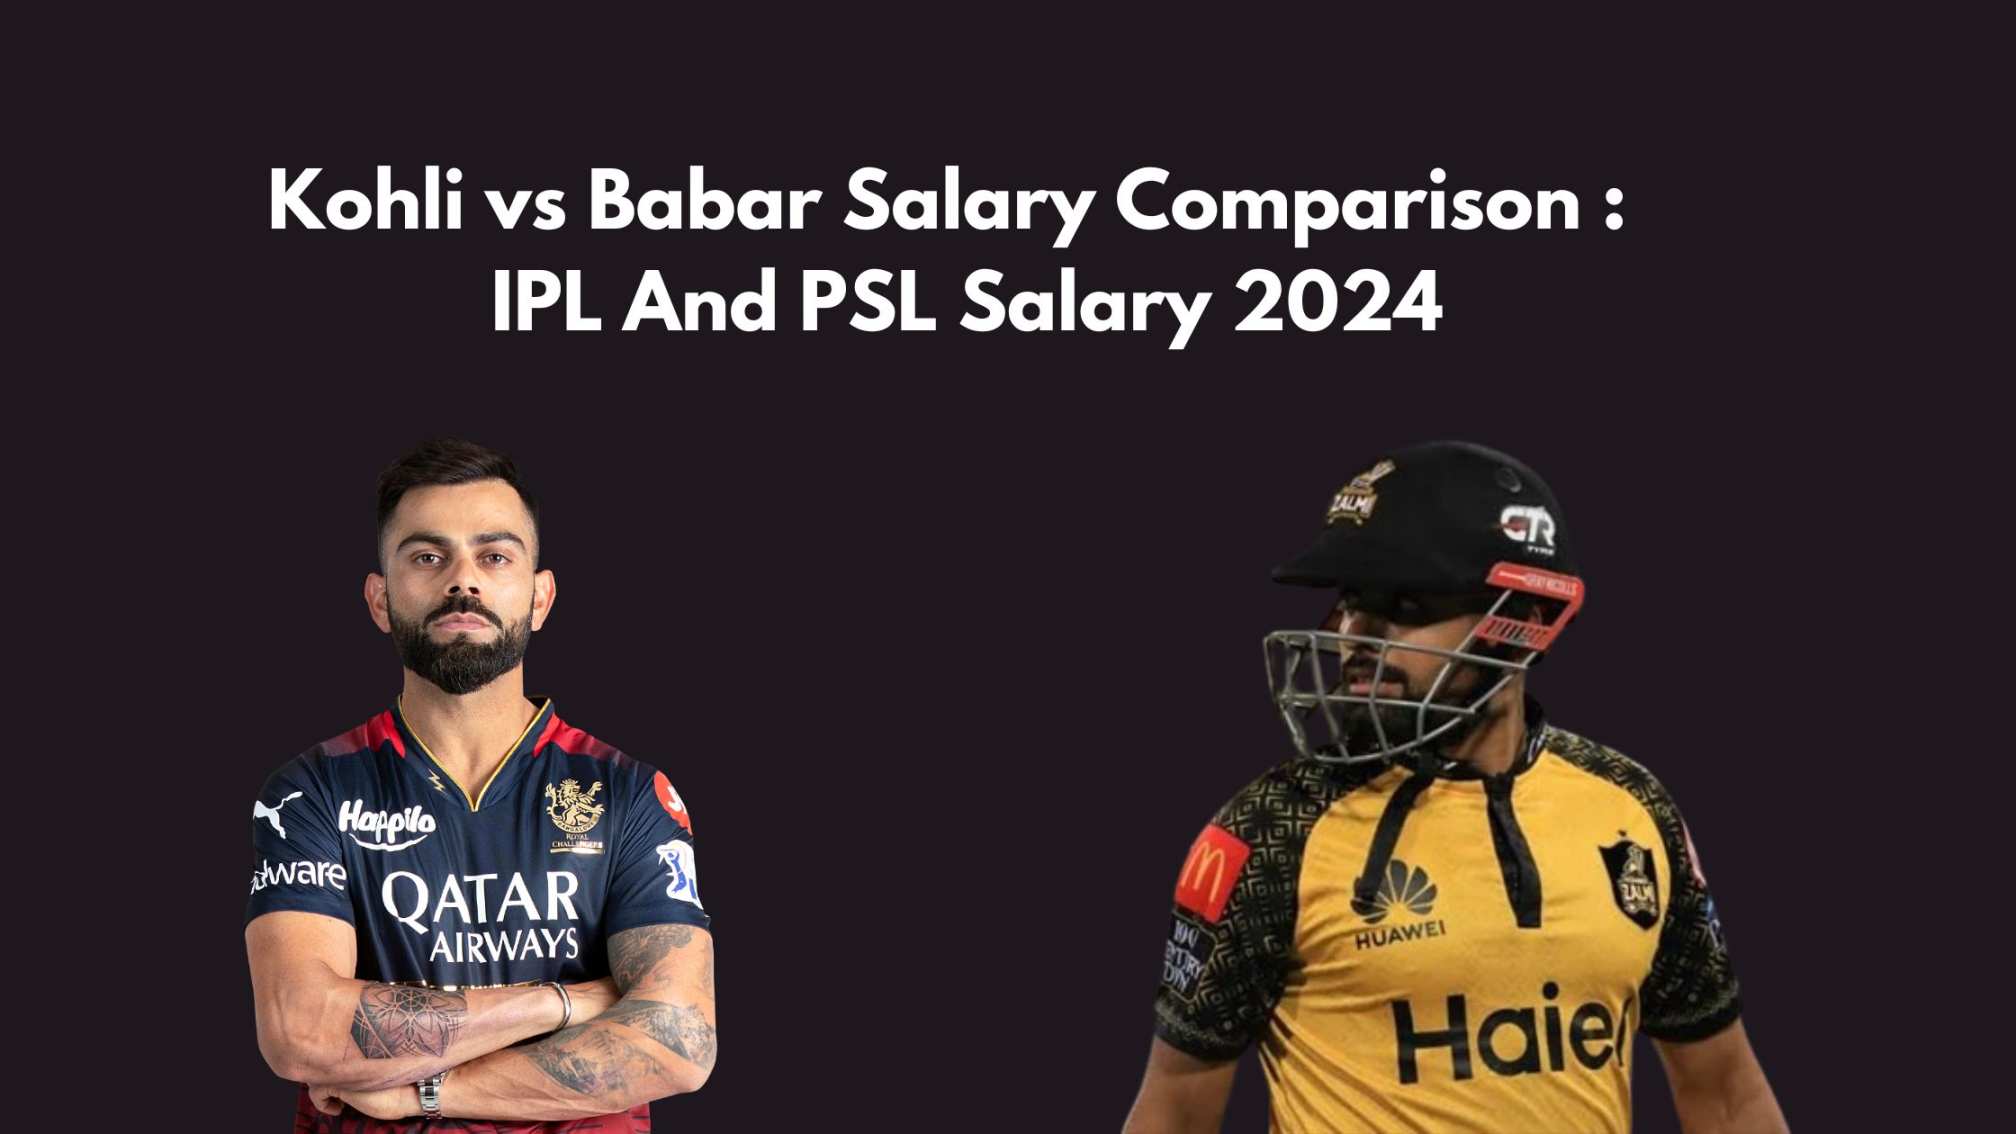 Kohli vs Babar Salary Comparison : IPL And PSL Salary 2024